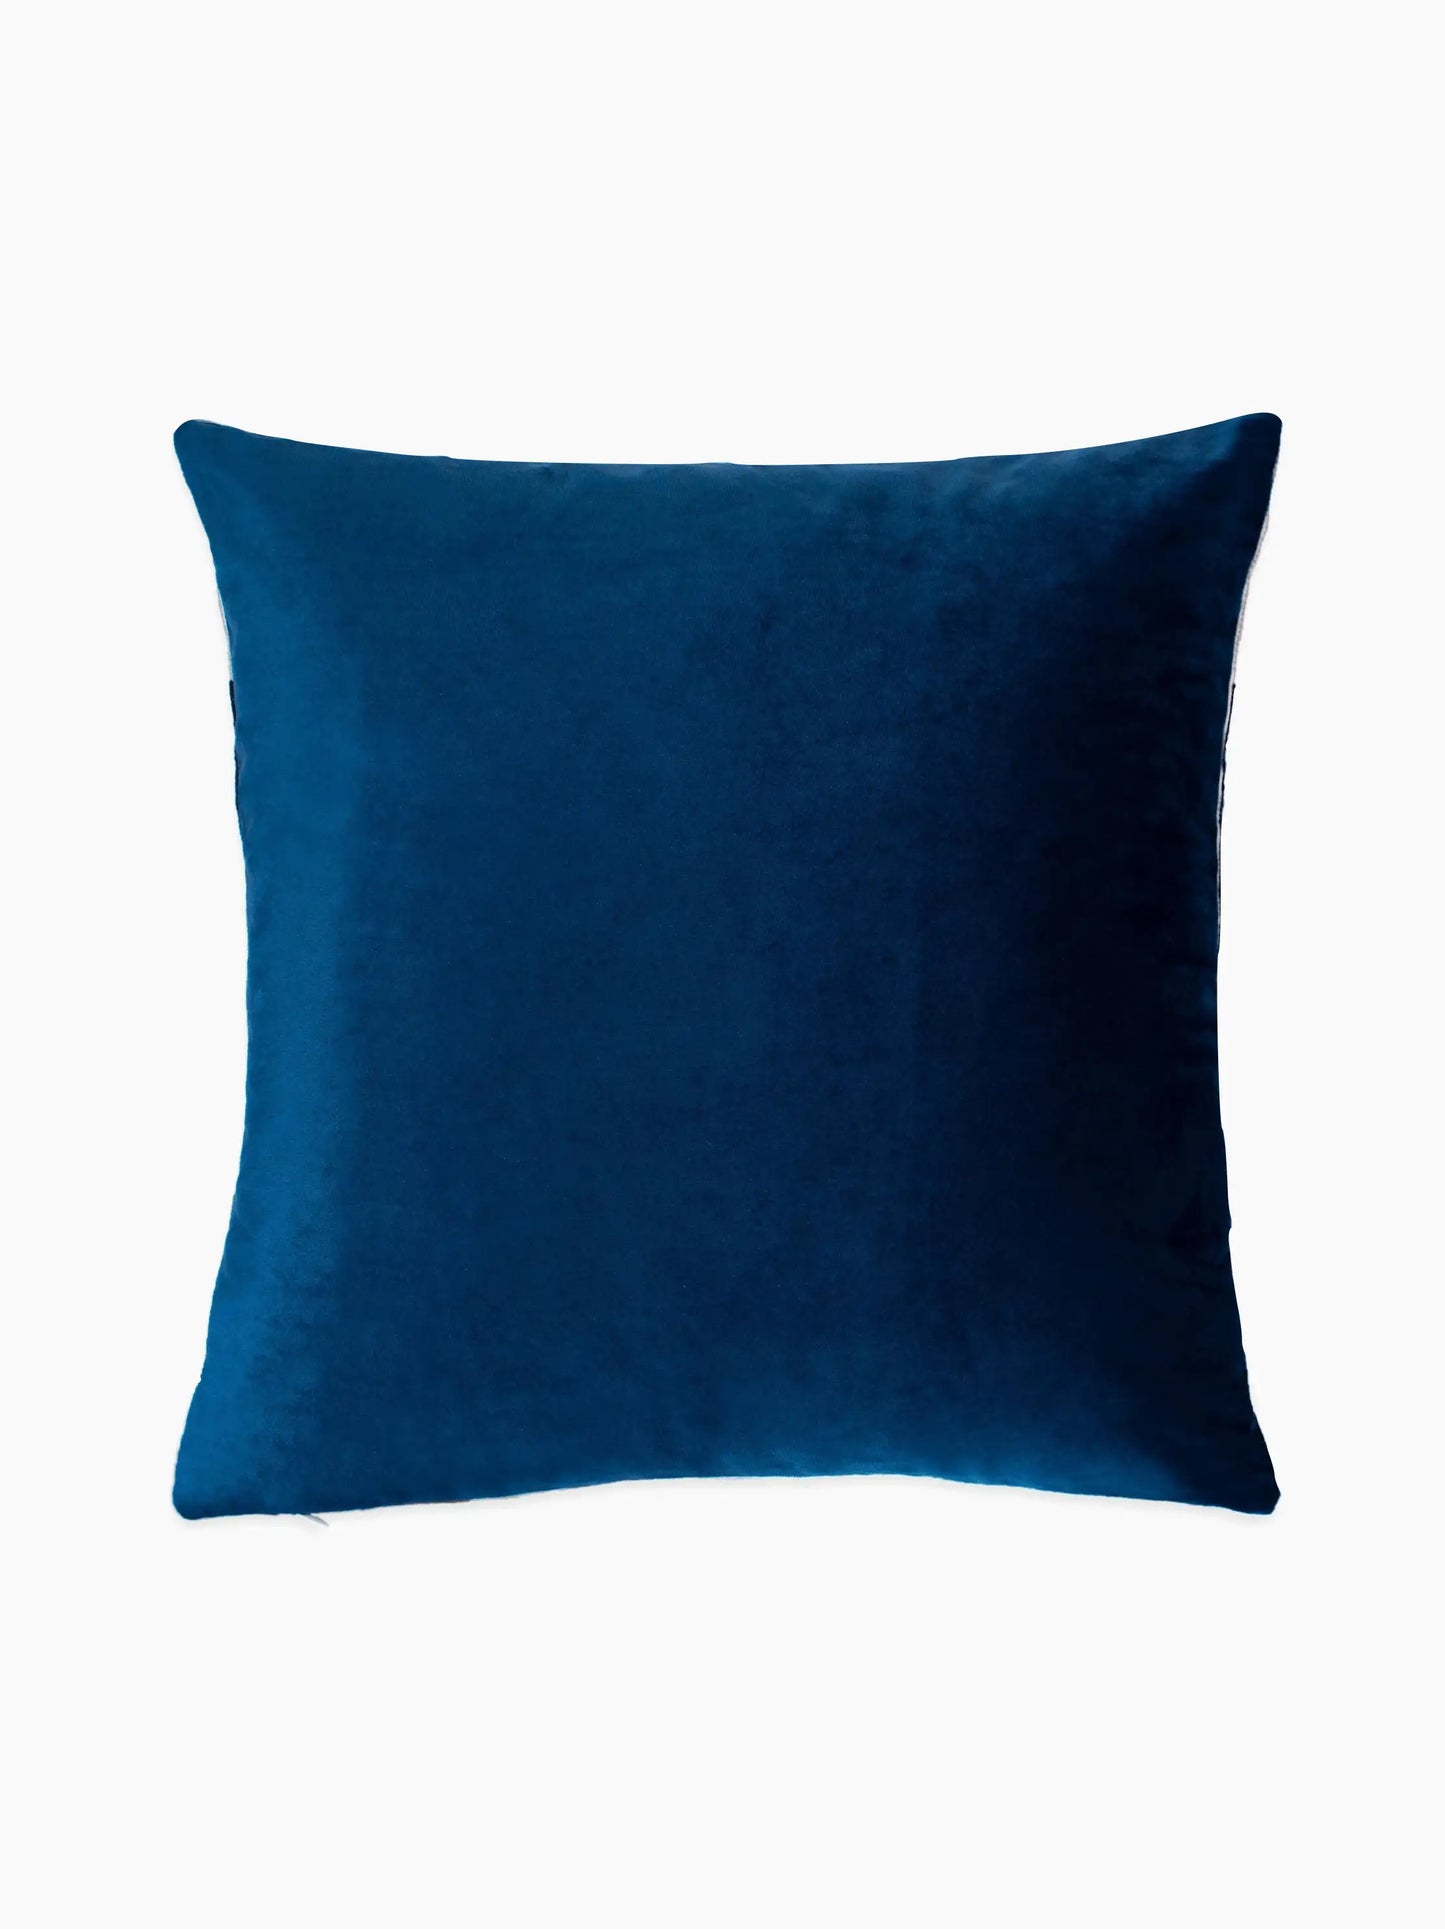 Aspen Needlepoint Cushion